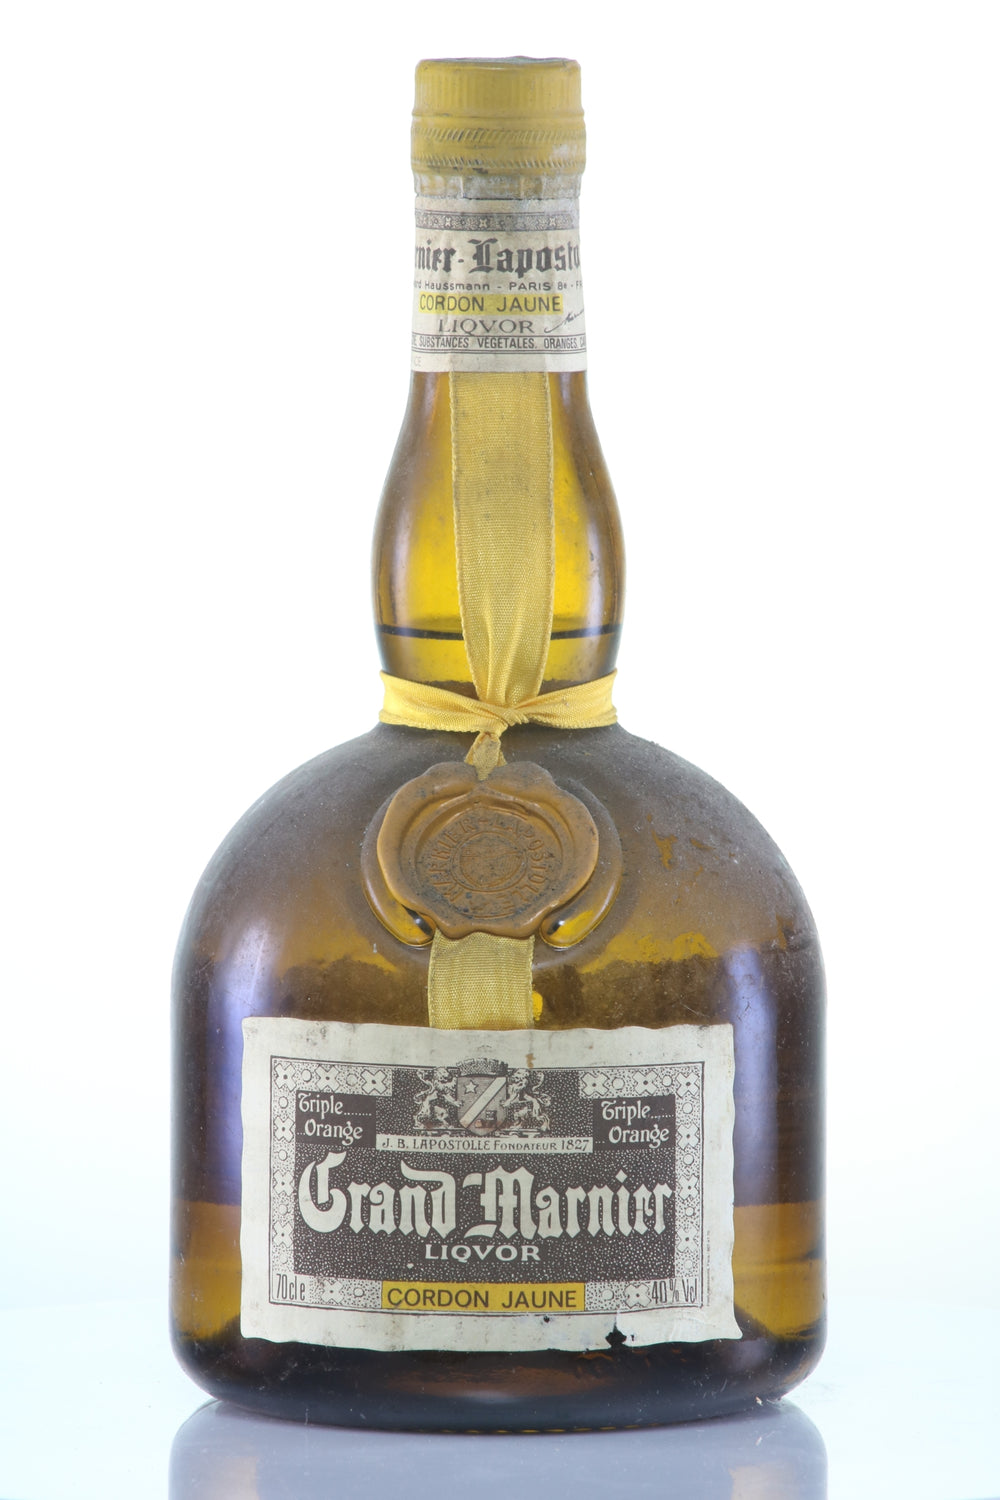 Grand Marnier Liqueur NV (Cordon Jaune, Triple Orange, Lapostolle) - Rue Pinard